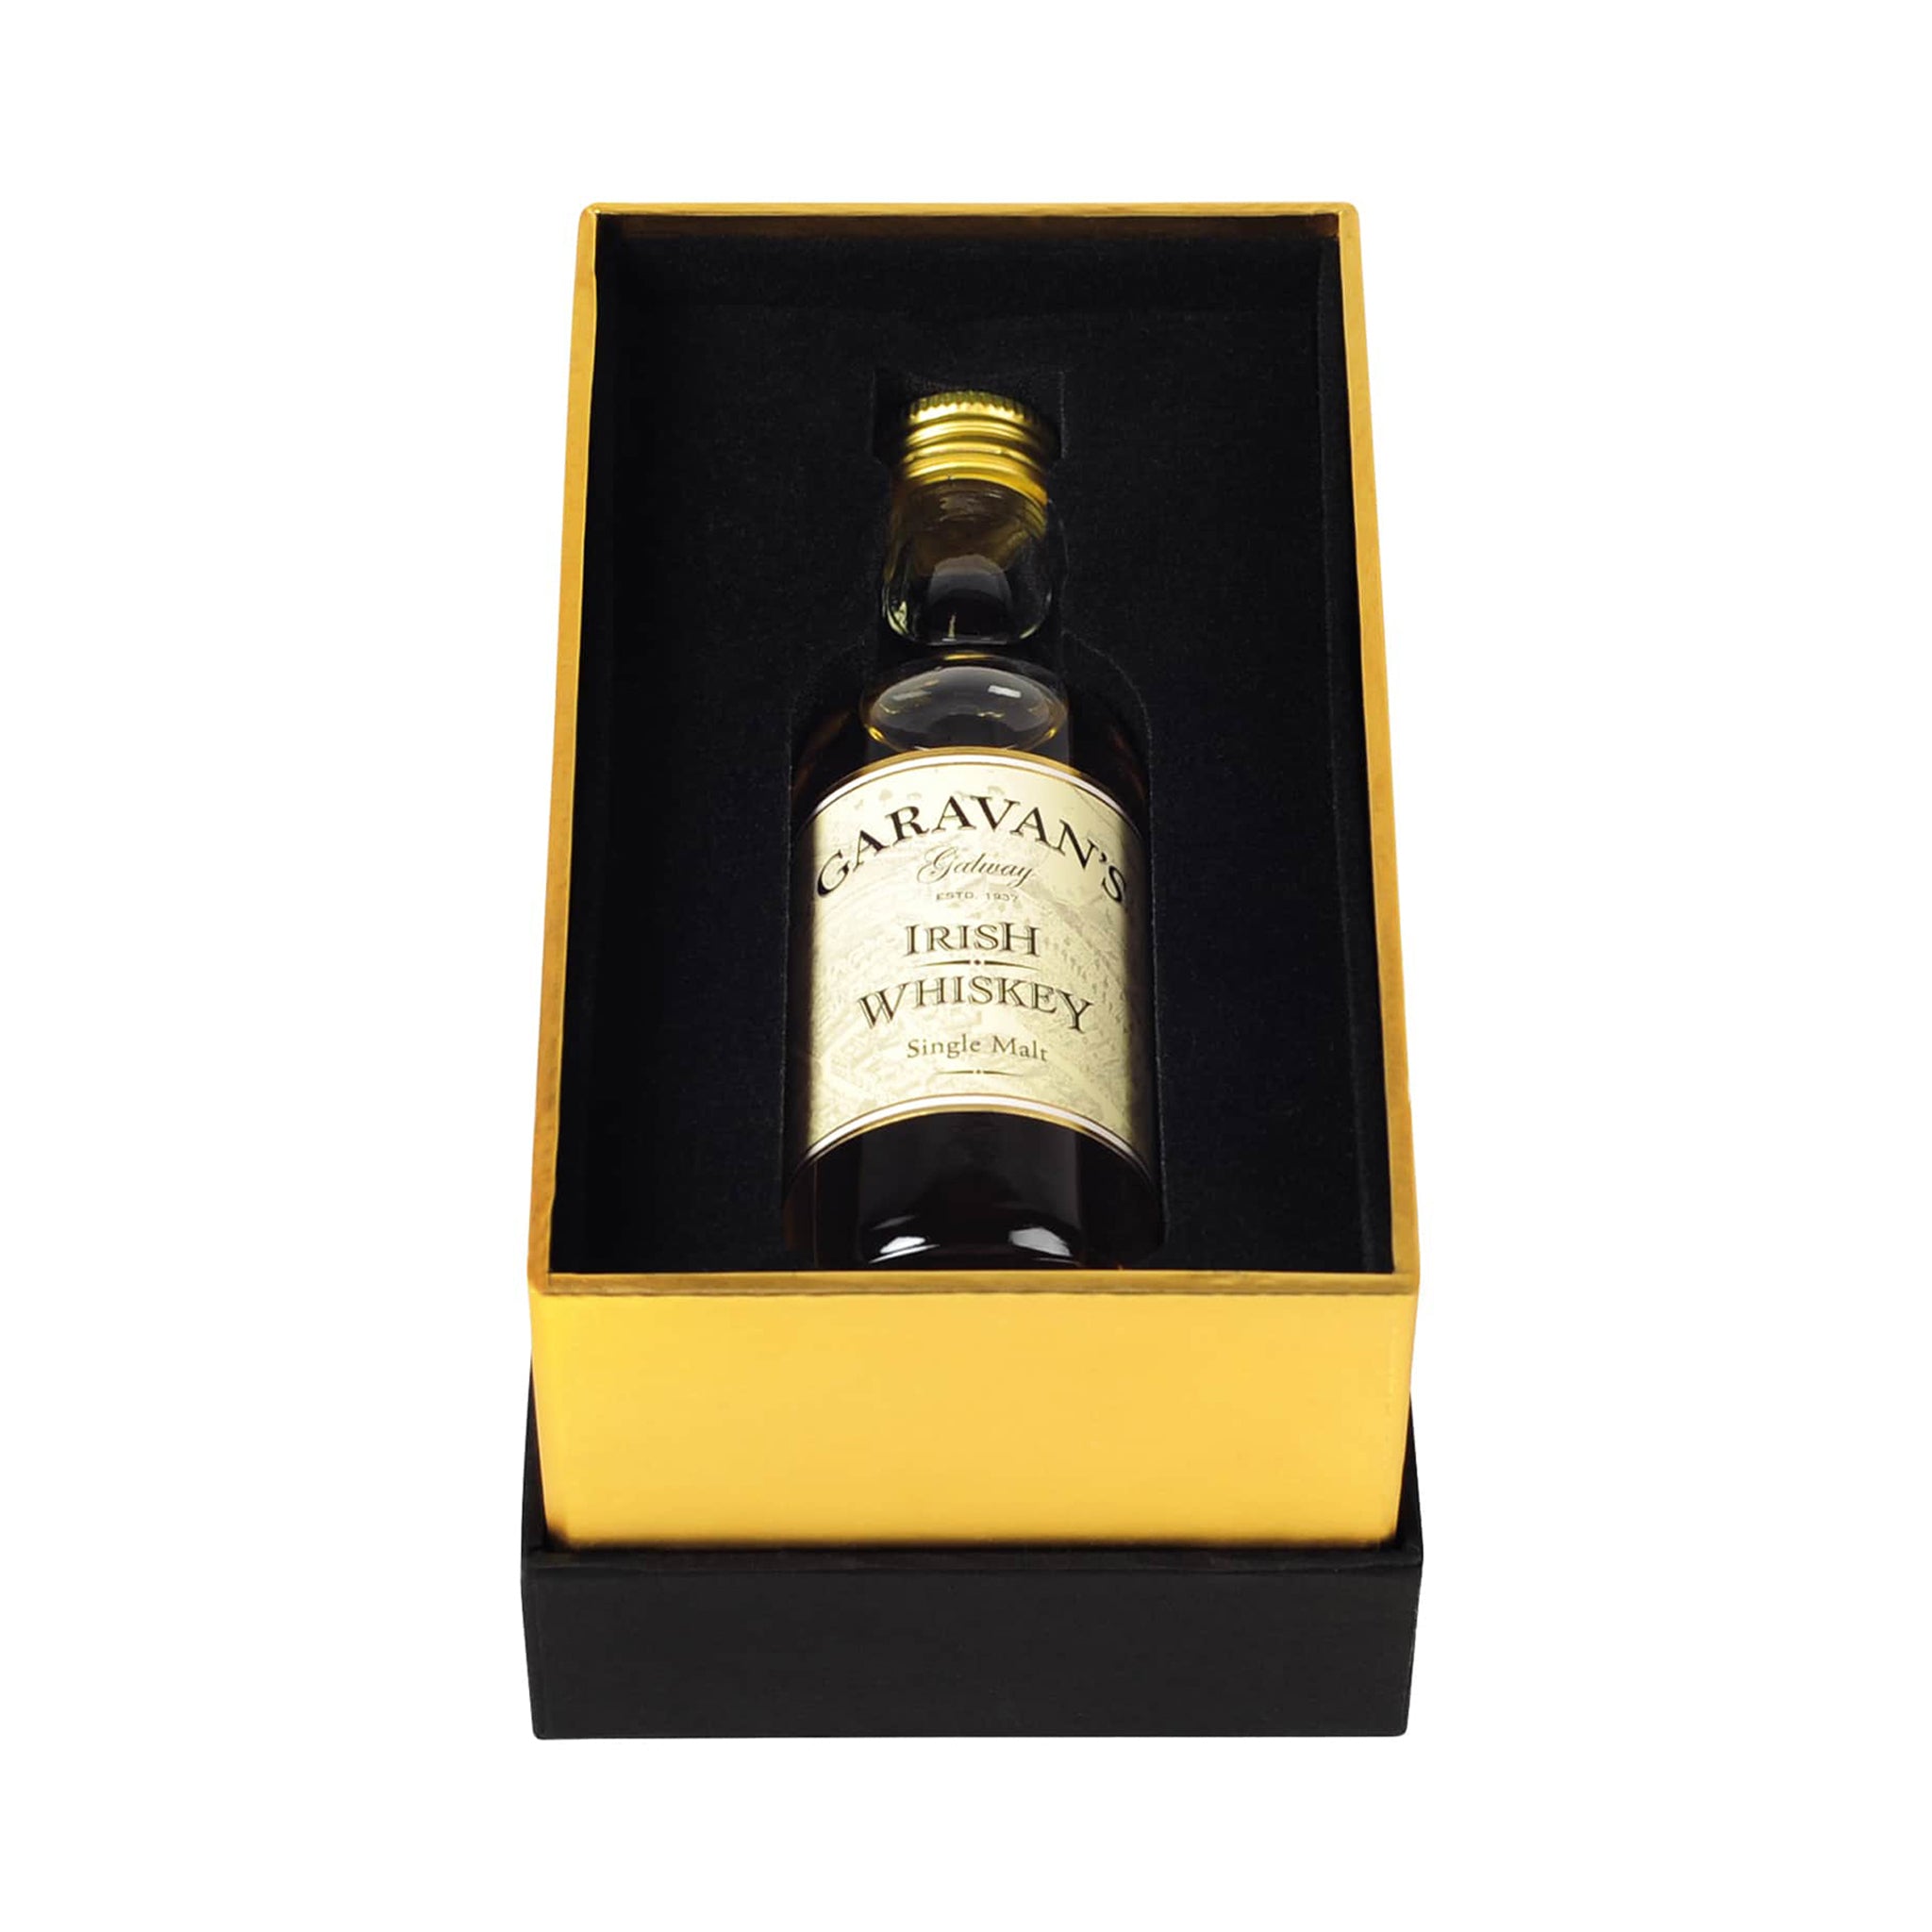 Garavan’s Miniature 8 Year-Old Single Malt Irish Whiskey - Handpicked for Rich Taste and Gorgeous Aromas - Gift Box Included